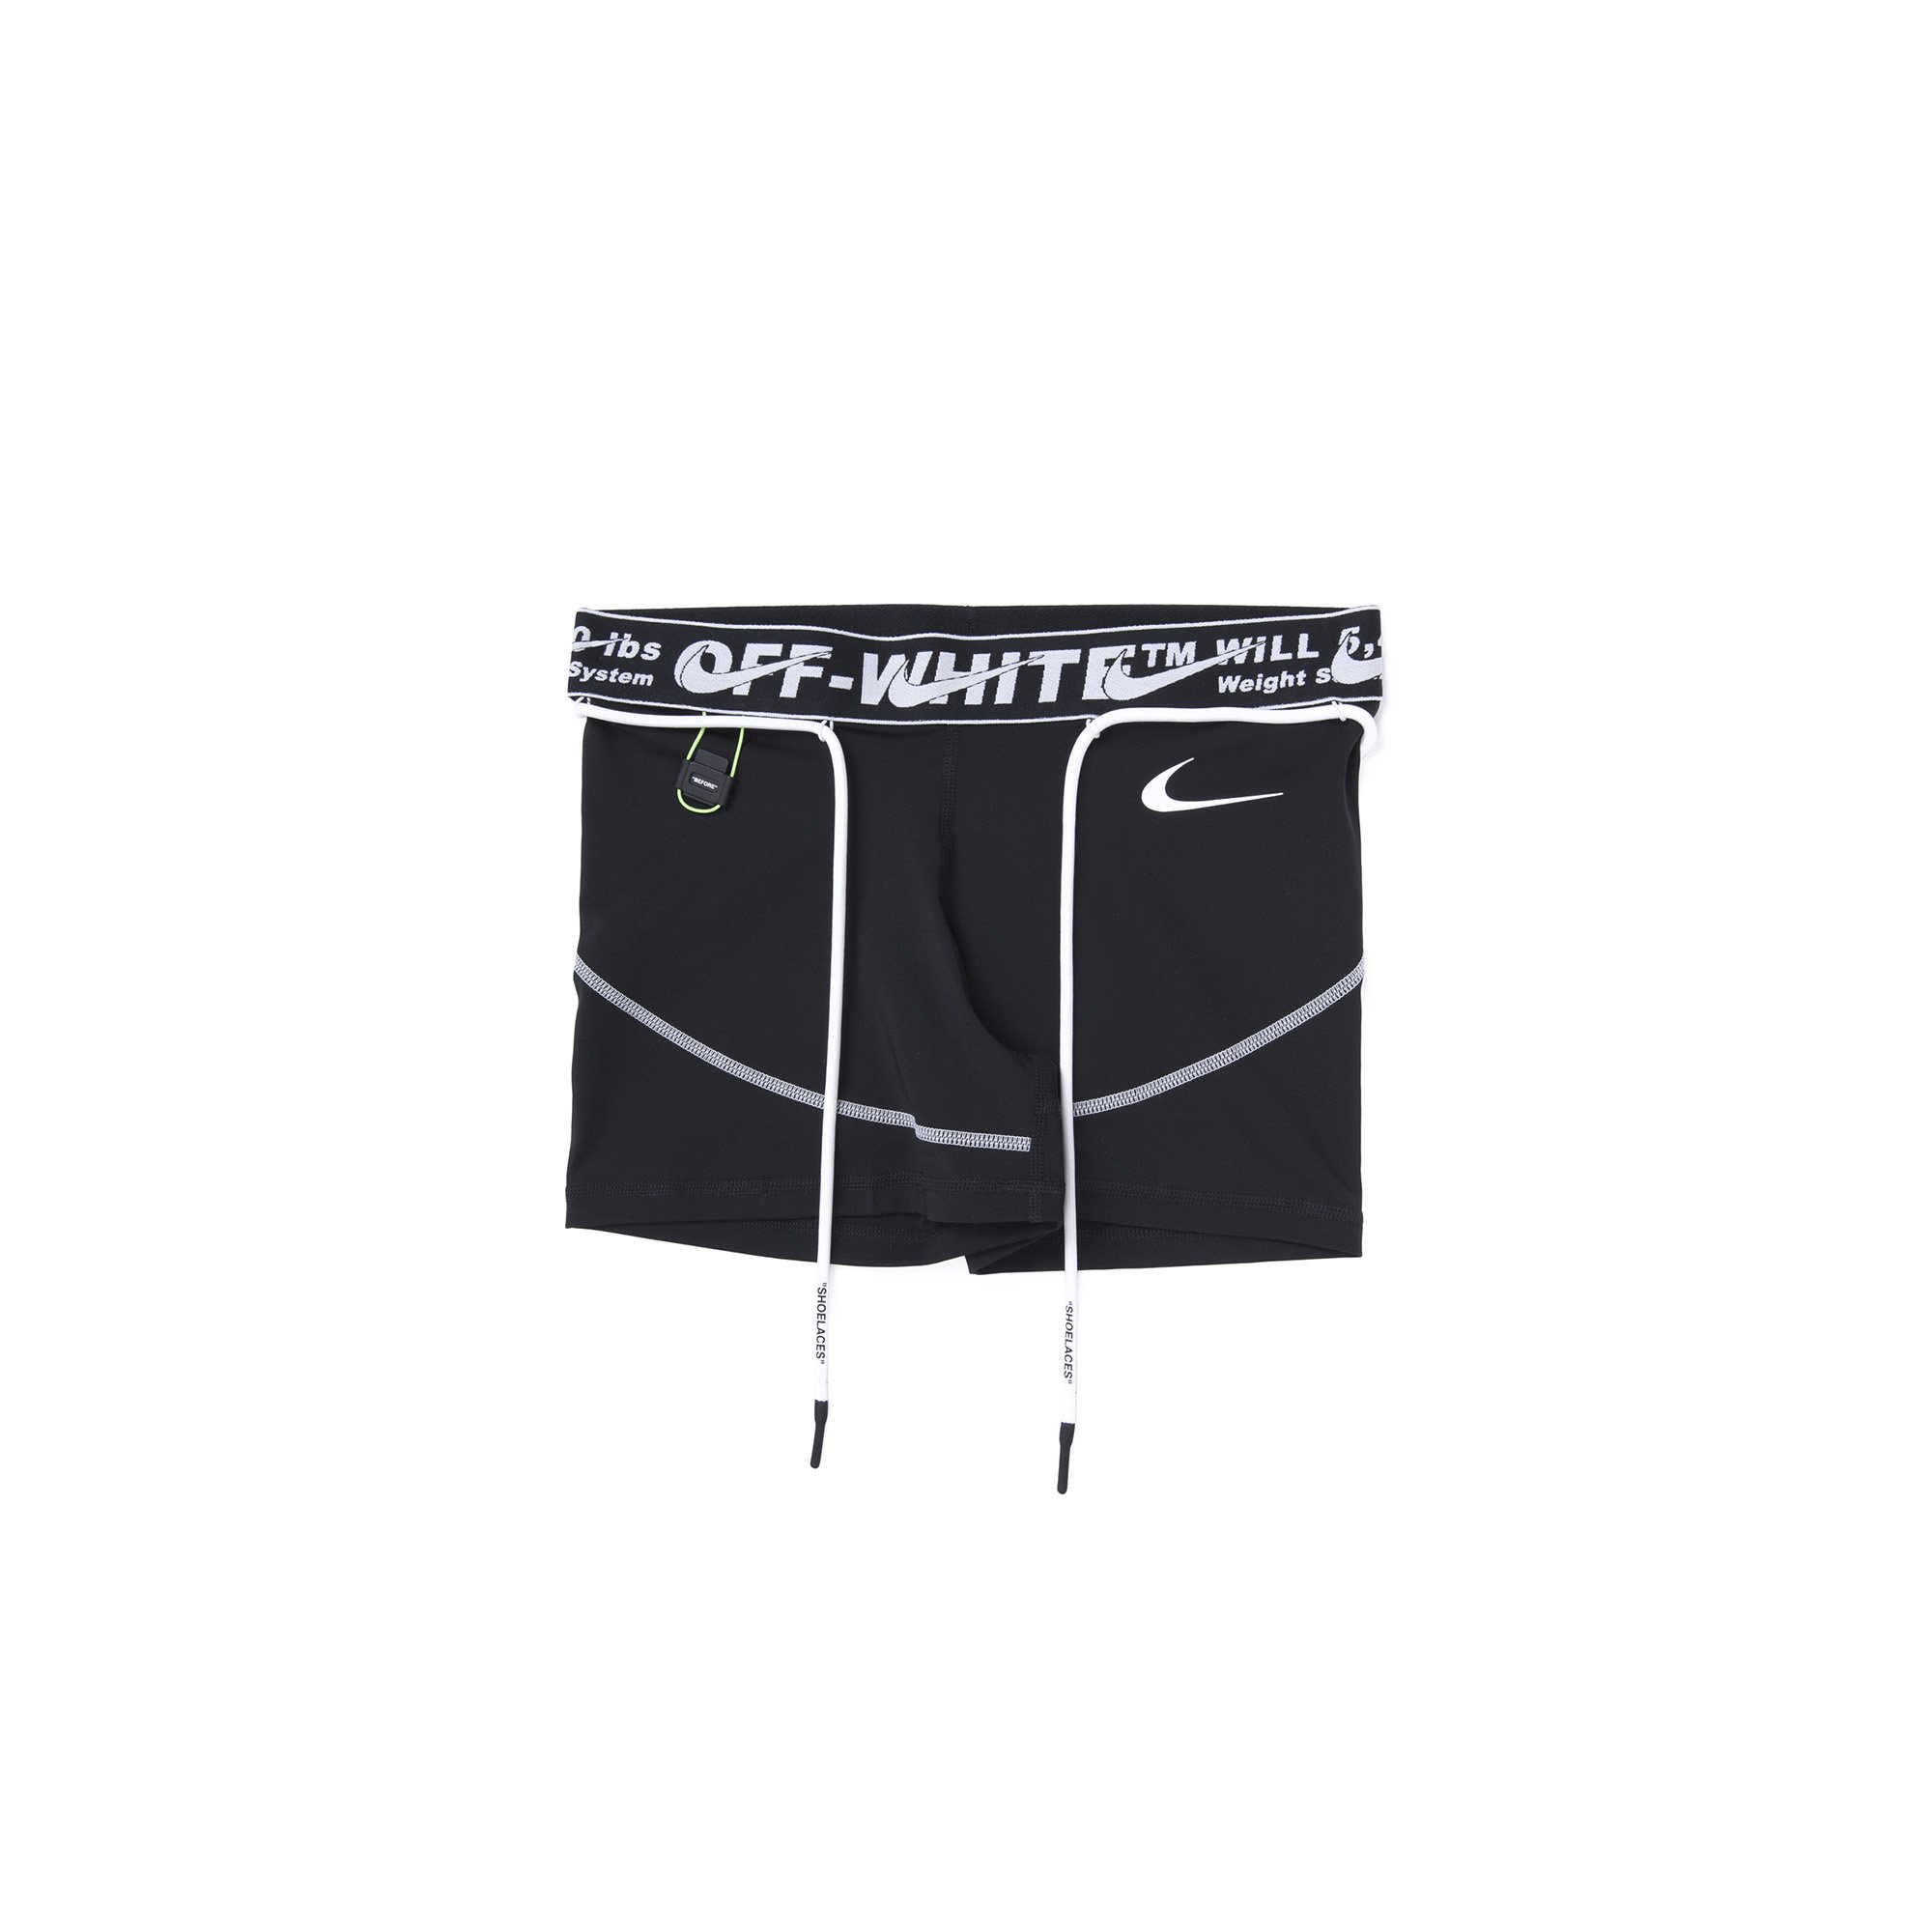 white nike shorts with black trim